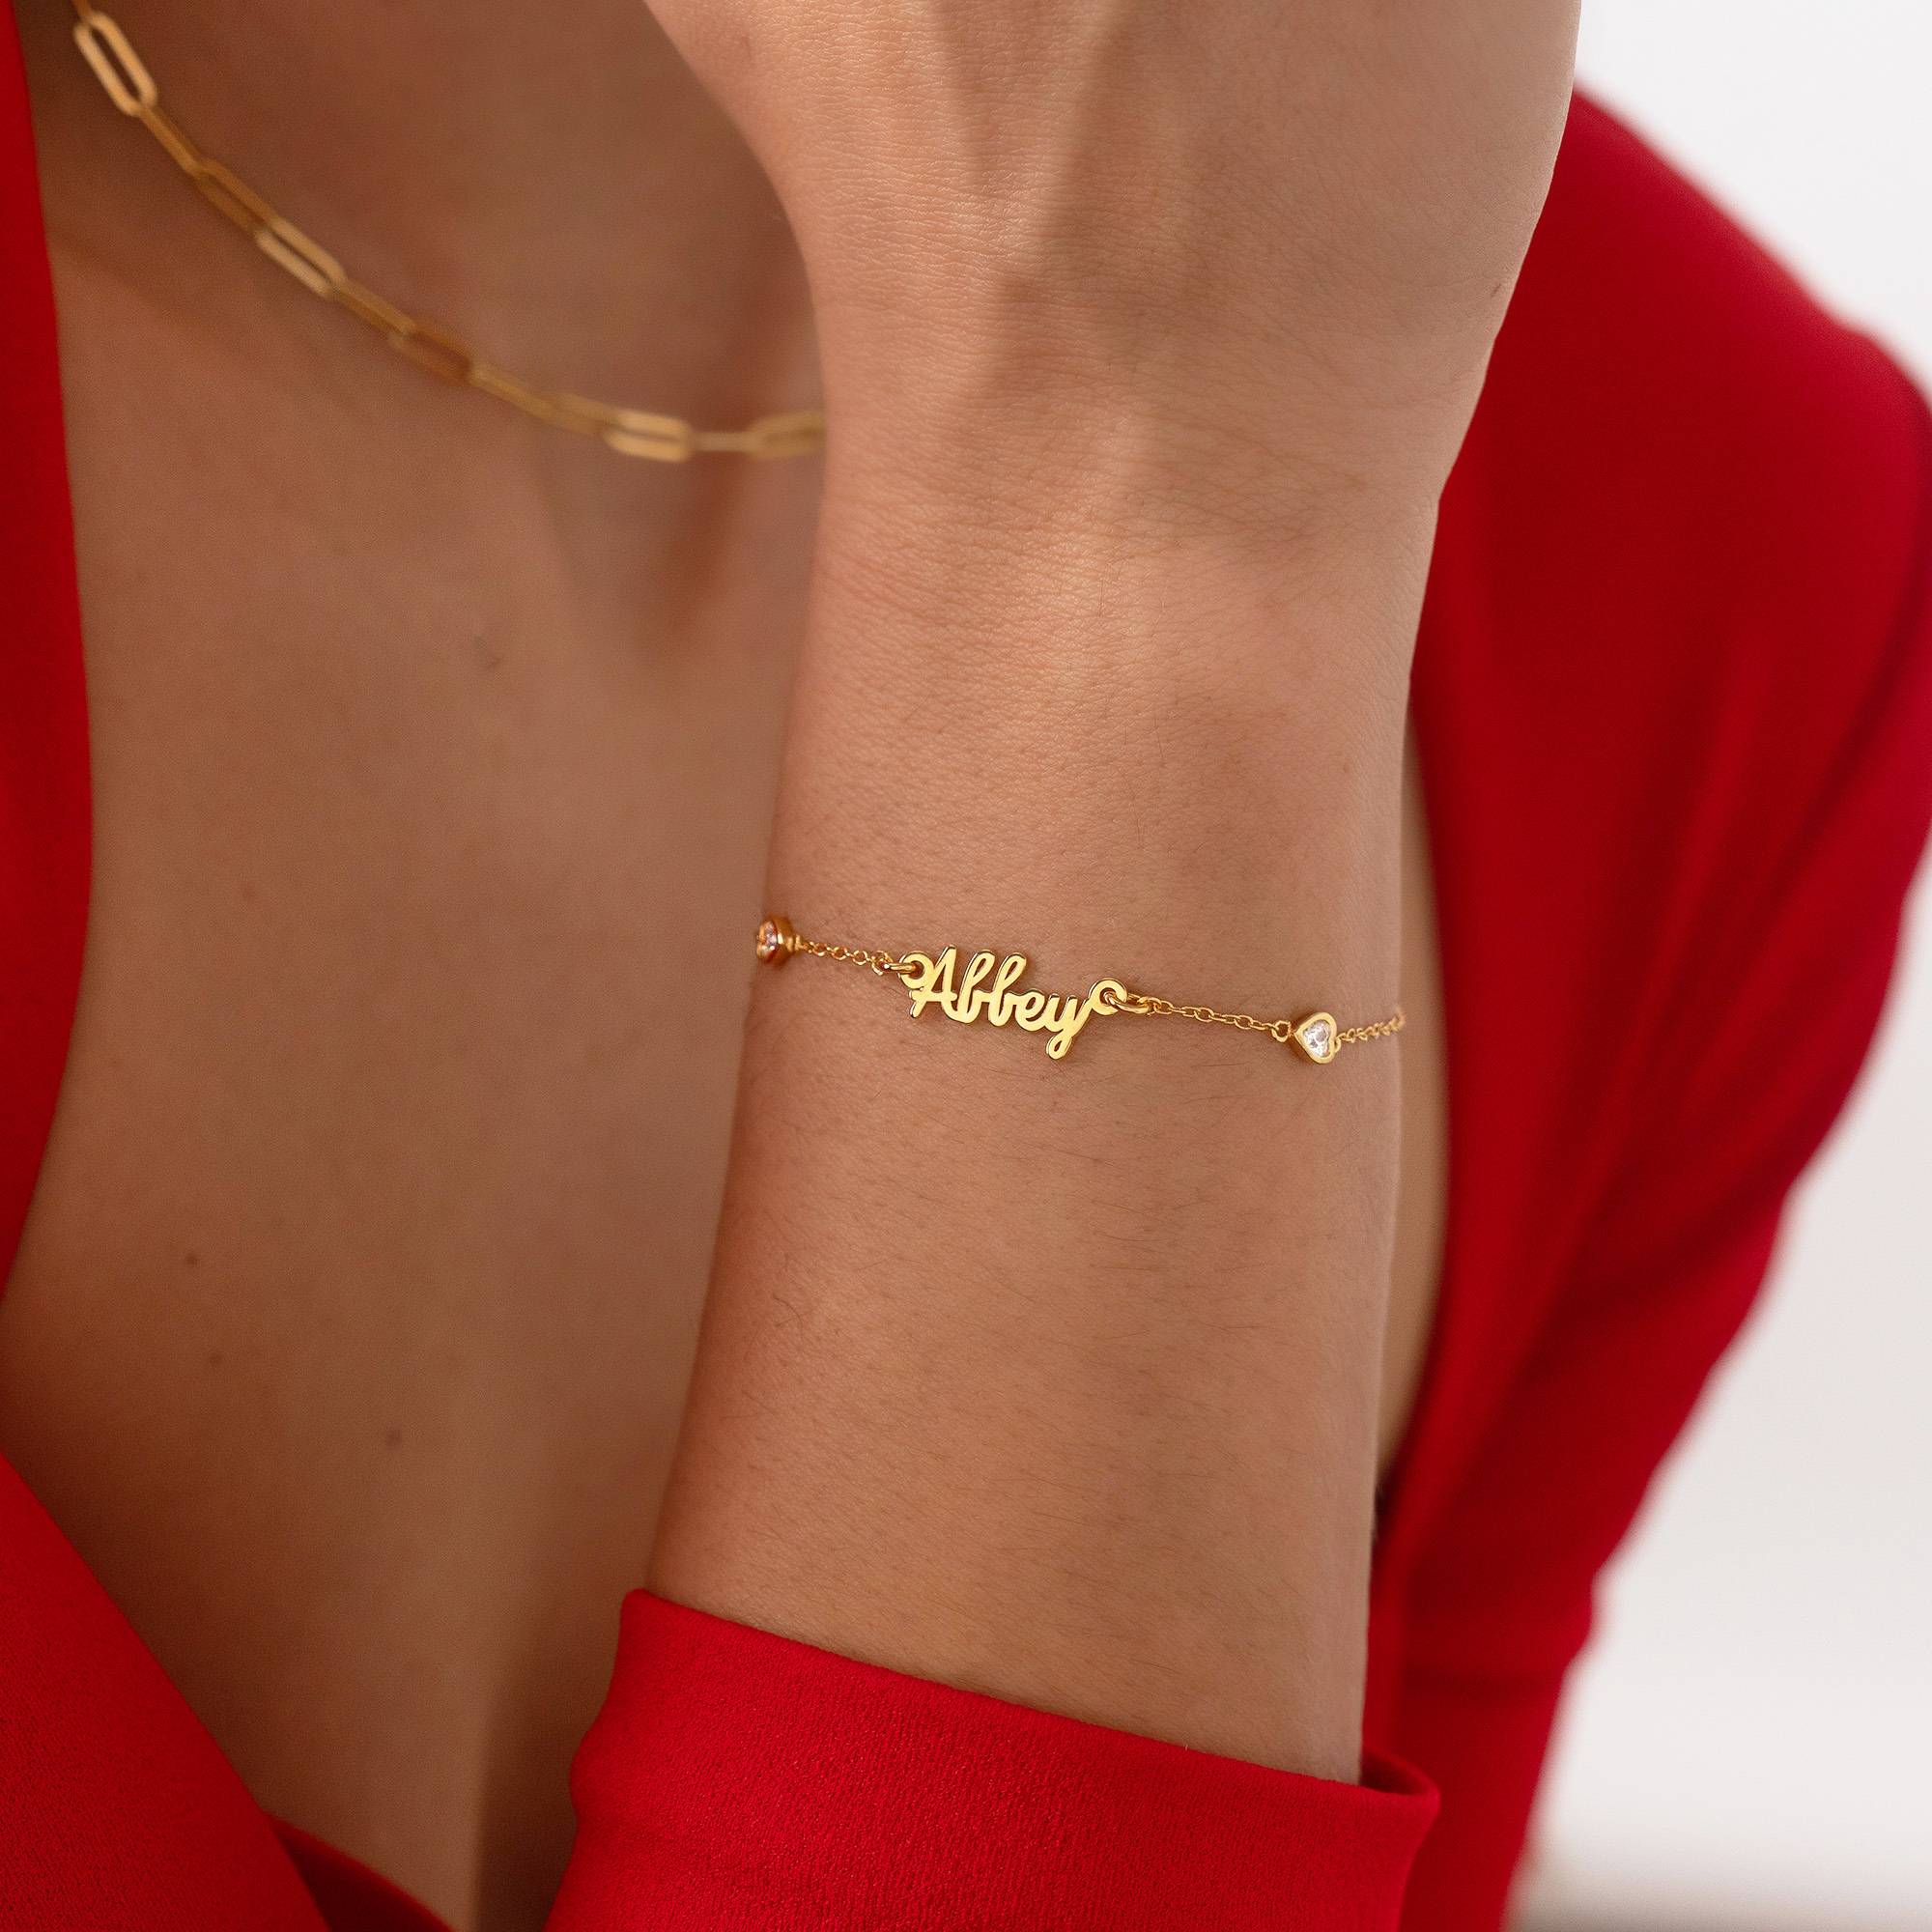 Charli Heart Chain Name Bracelet in 18K Gold Vermeil-2 product photo